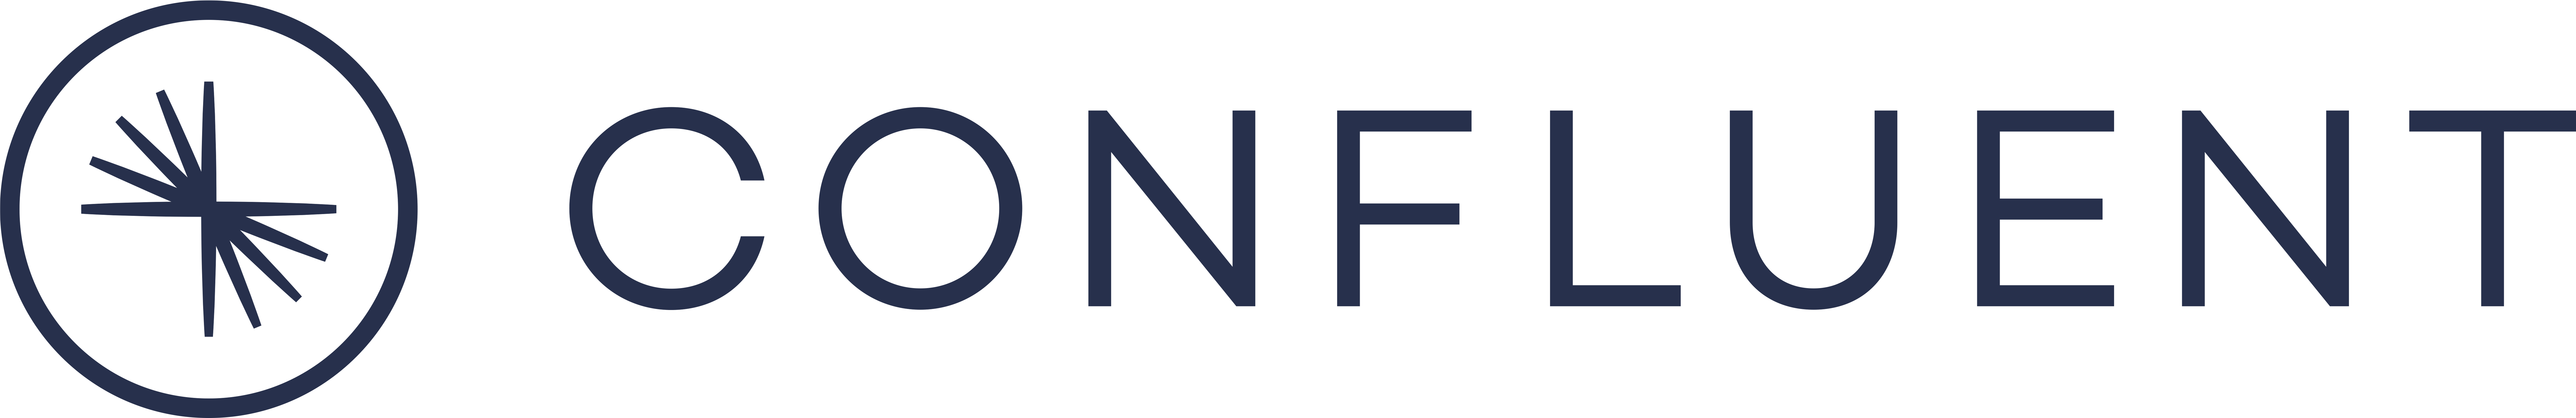 Confluent logo